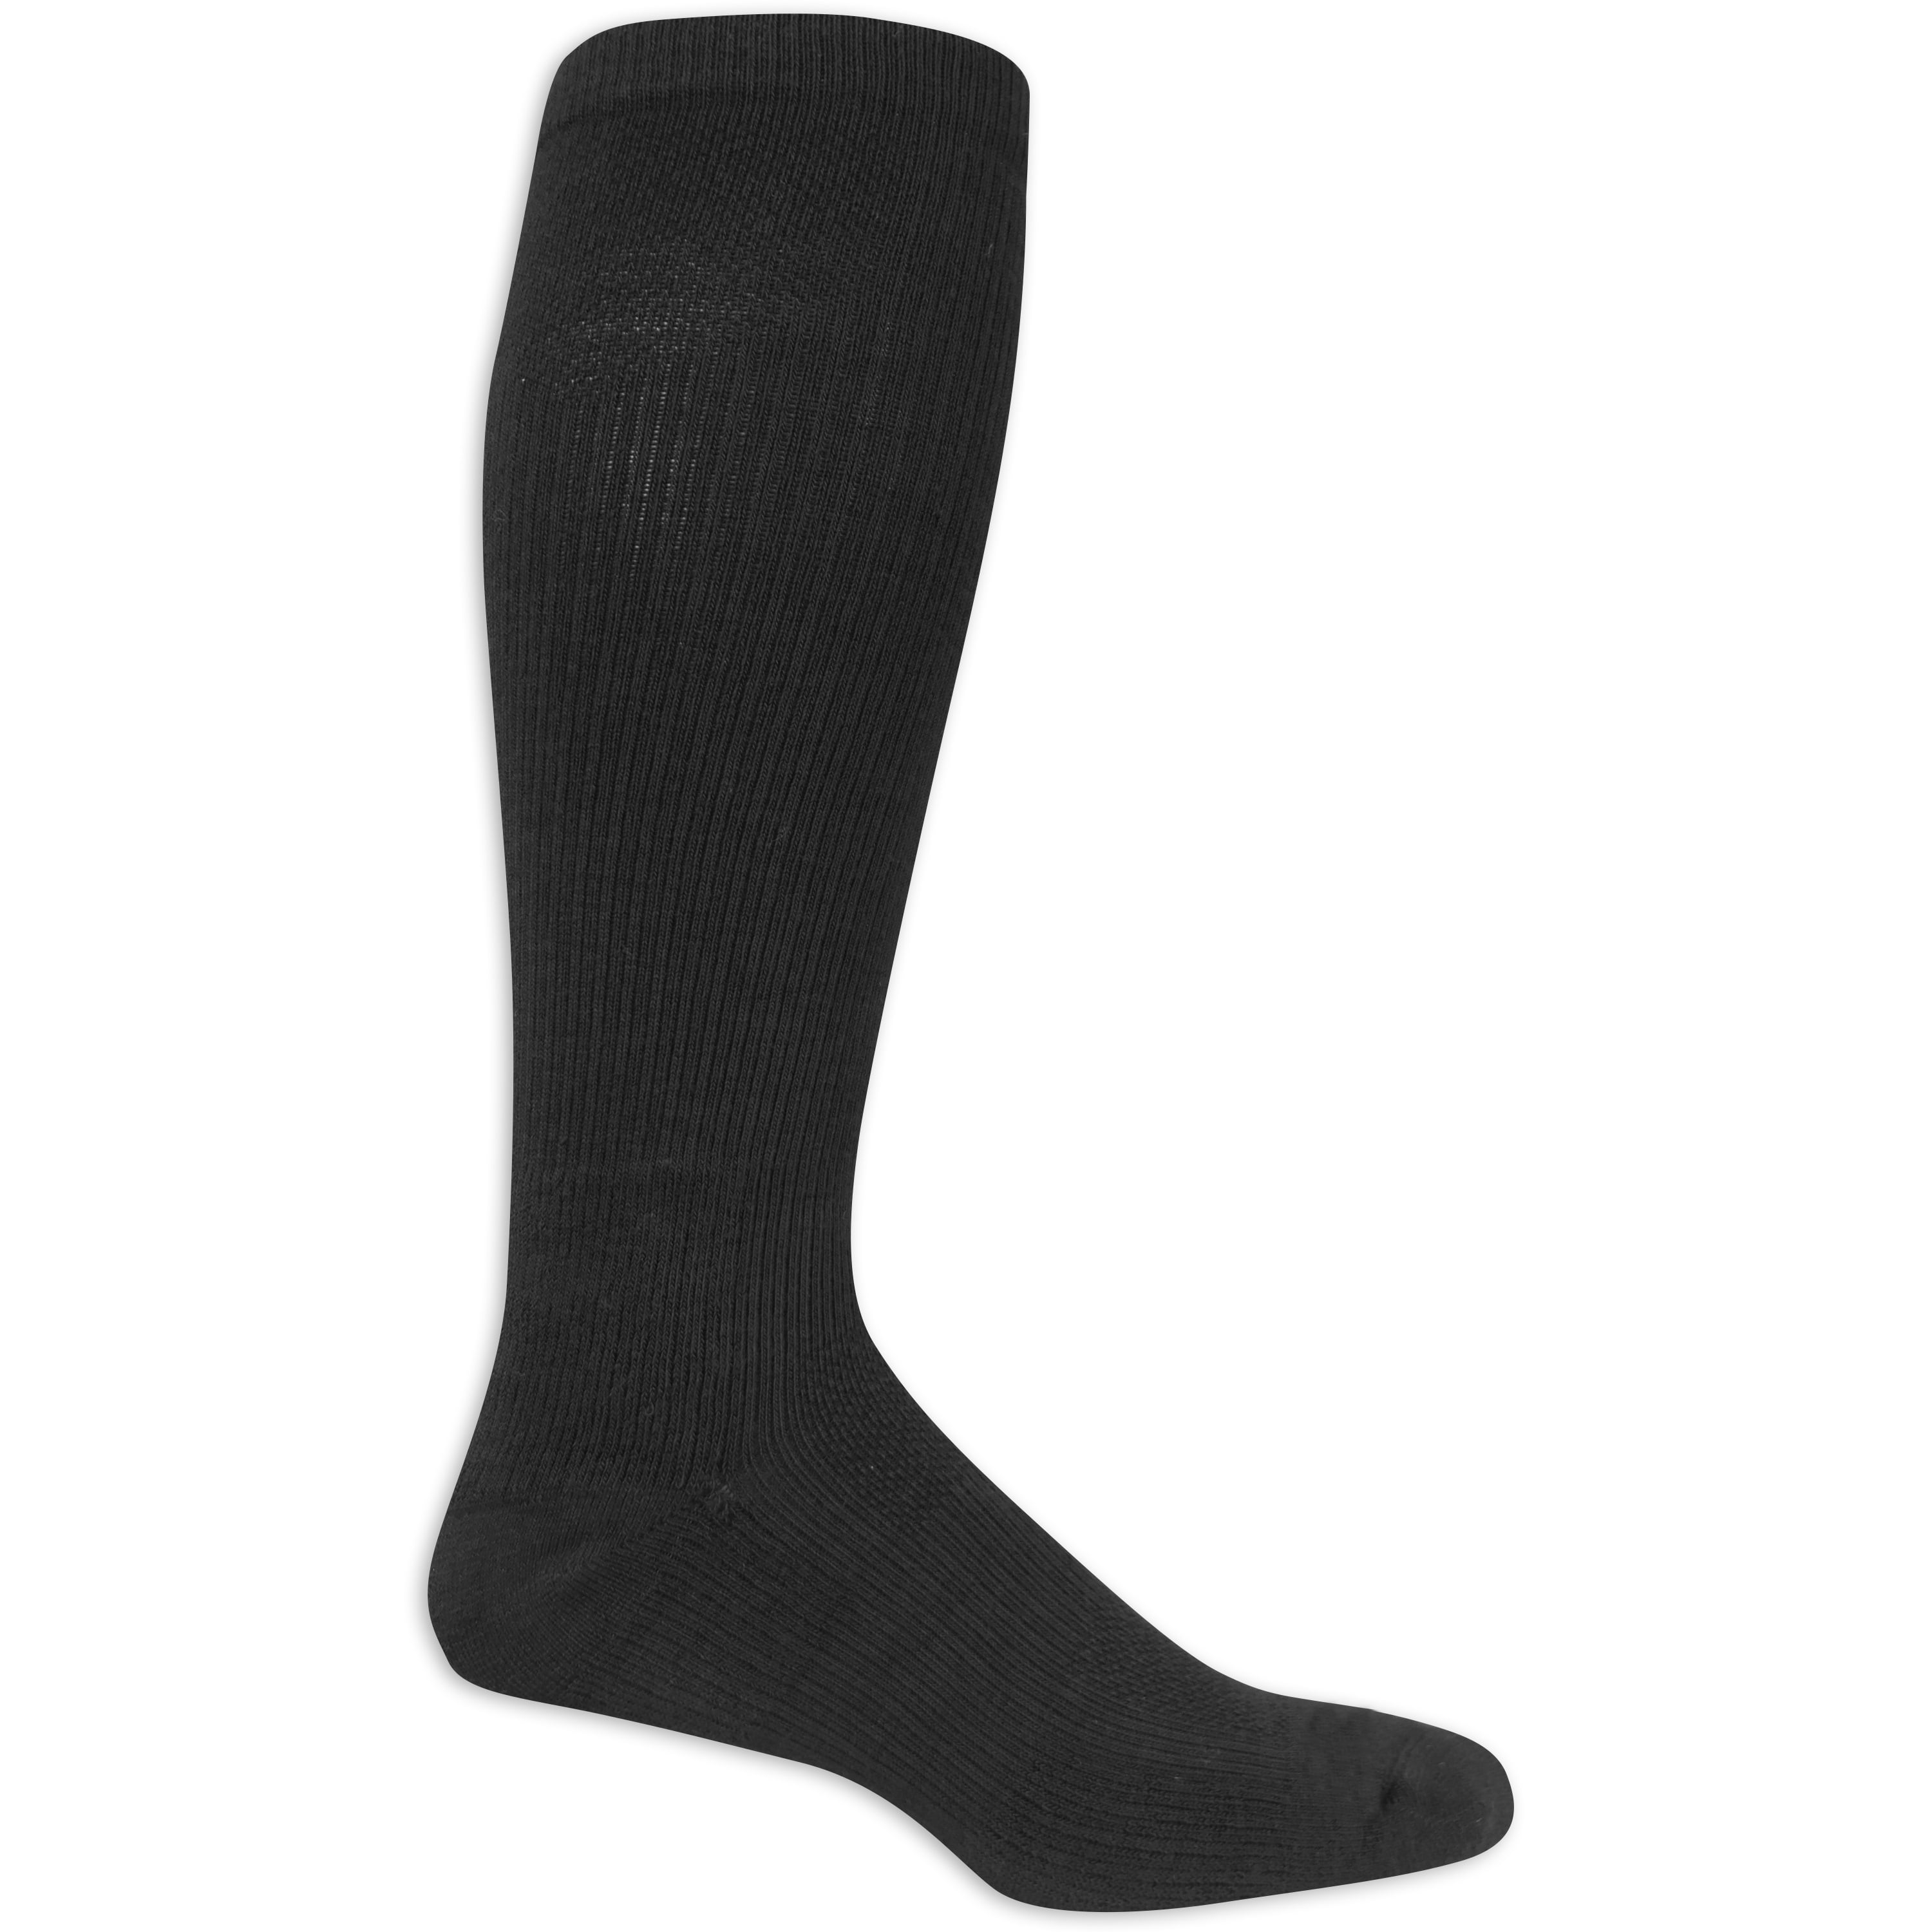 Graduated Compression Knee High Socks Anti-Fatigue 4 Pairs Big & Tall Men USA Made